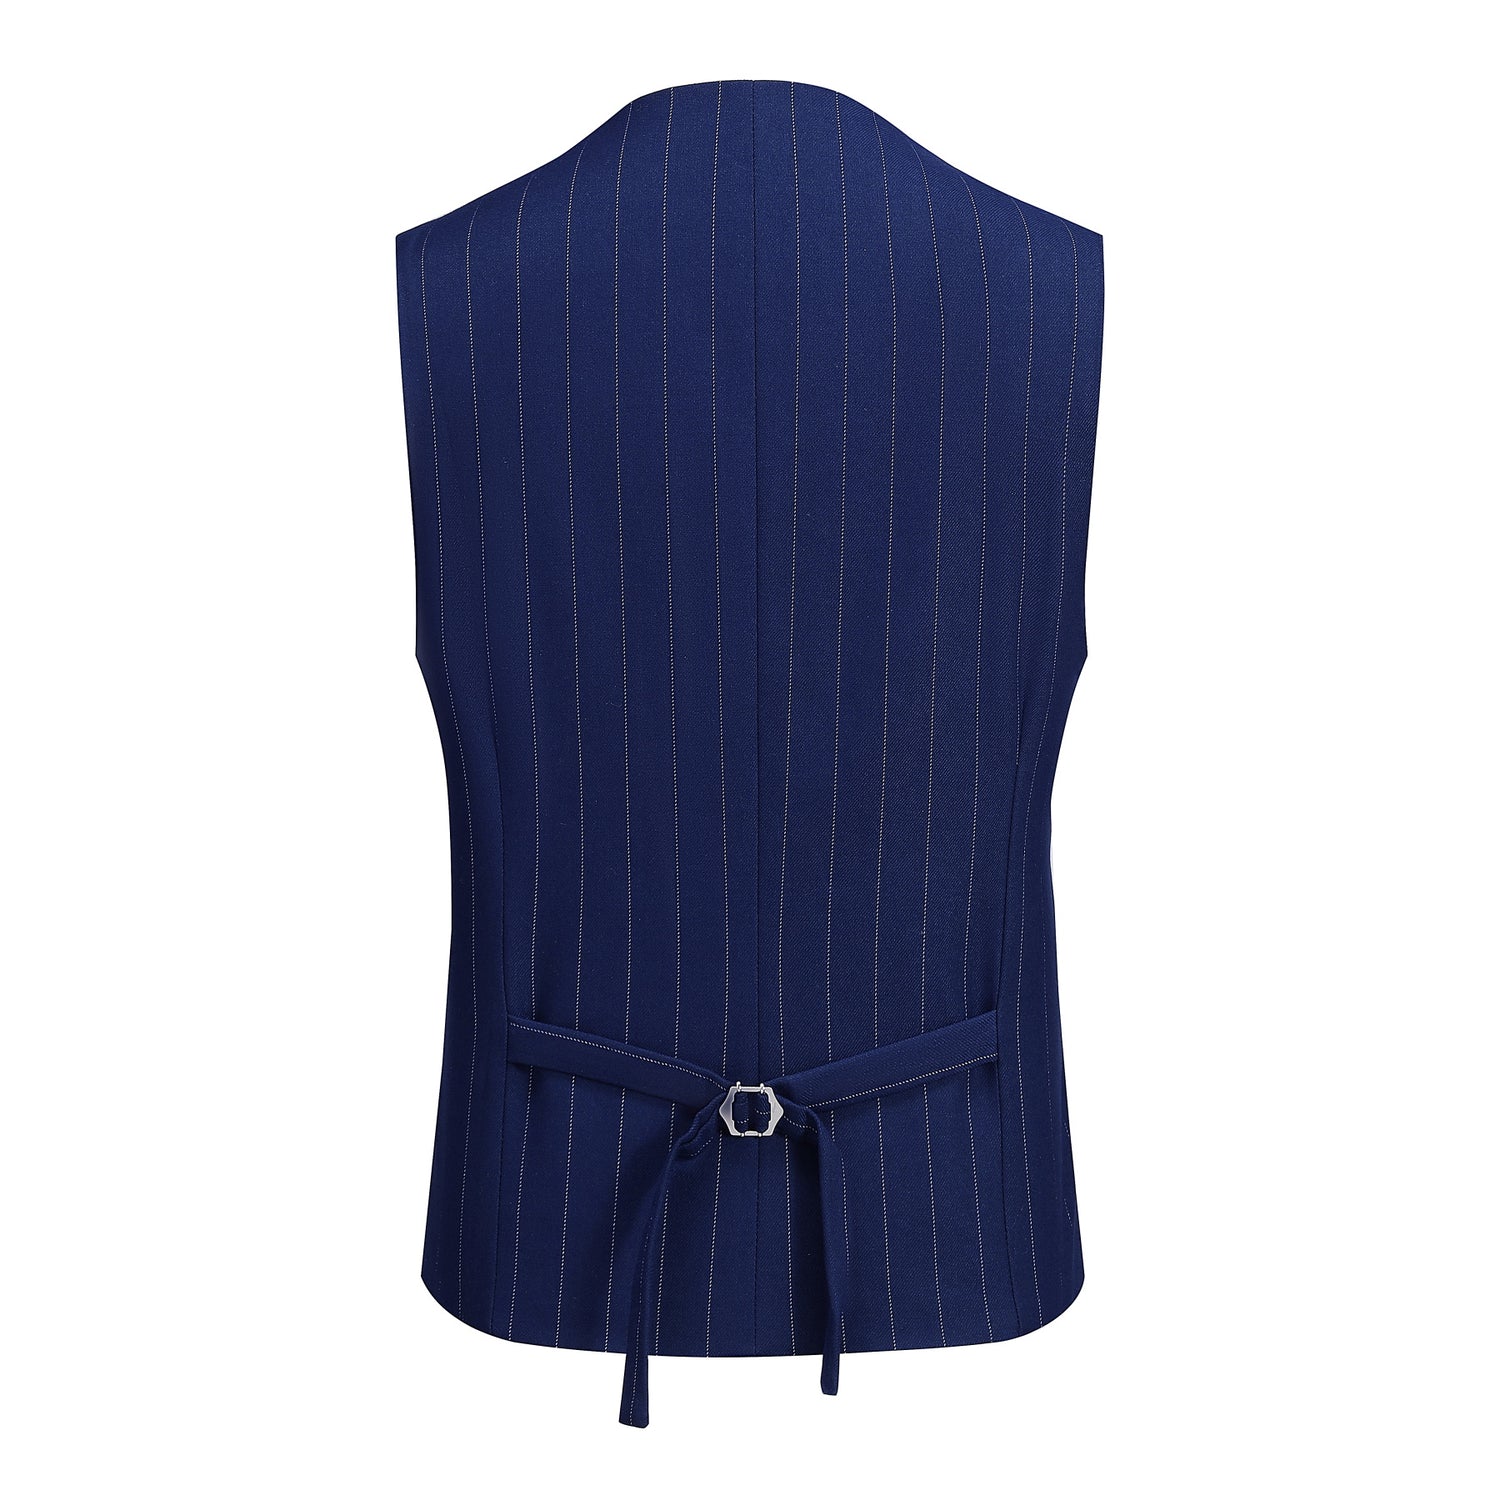 3-Piece Blue Suit Stripe Design Suit